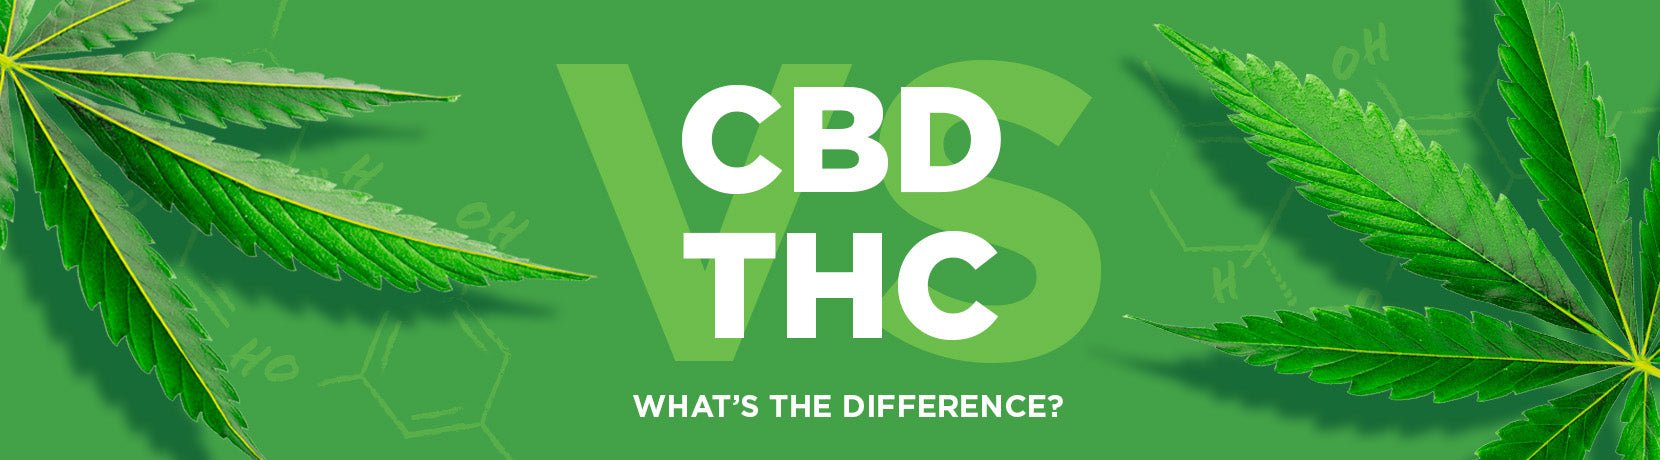 CBD vs. THC: What’s the Difference? - Shop CBD Kratom